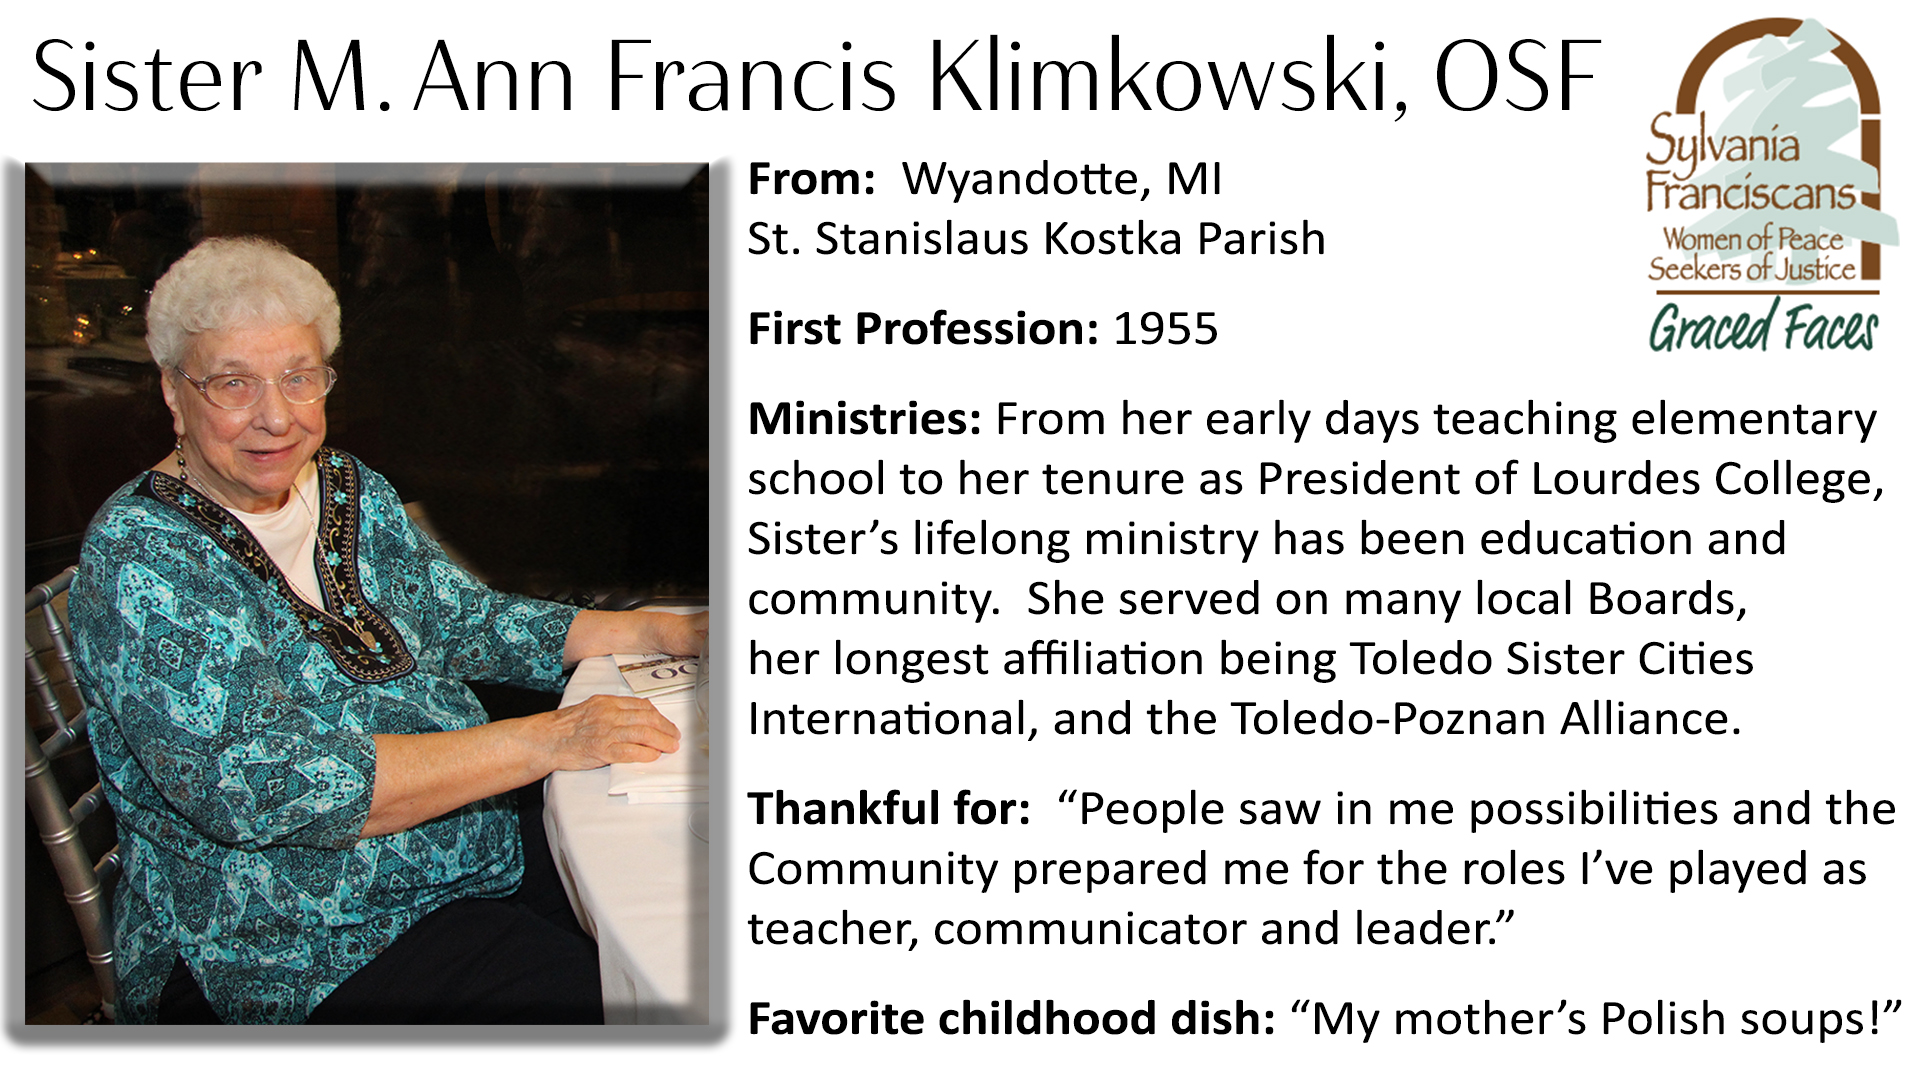 Sister Ann Francis Klimkowski Graced Faces